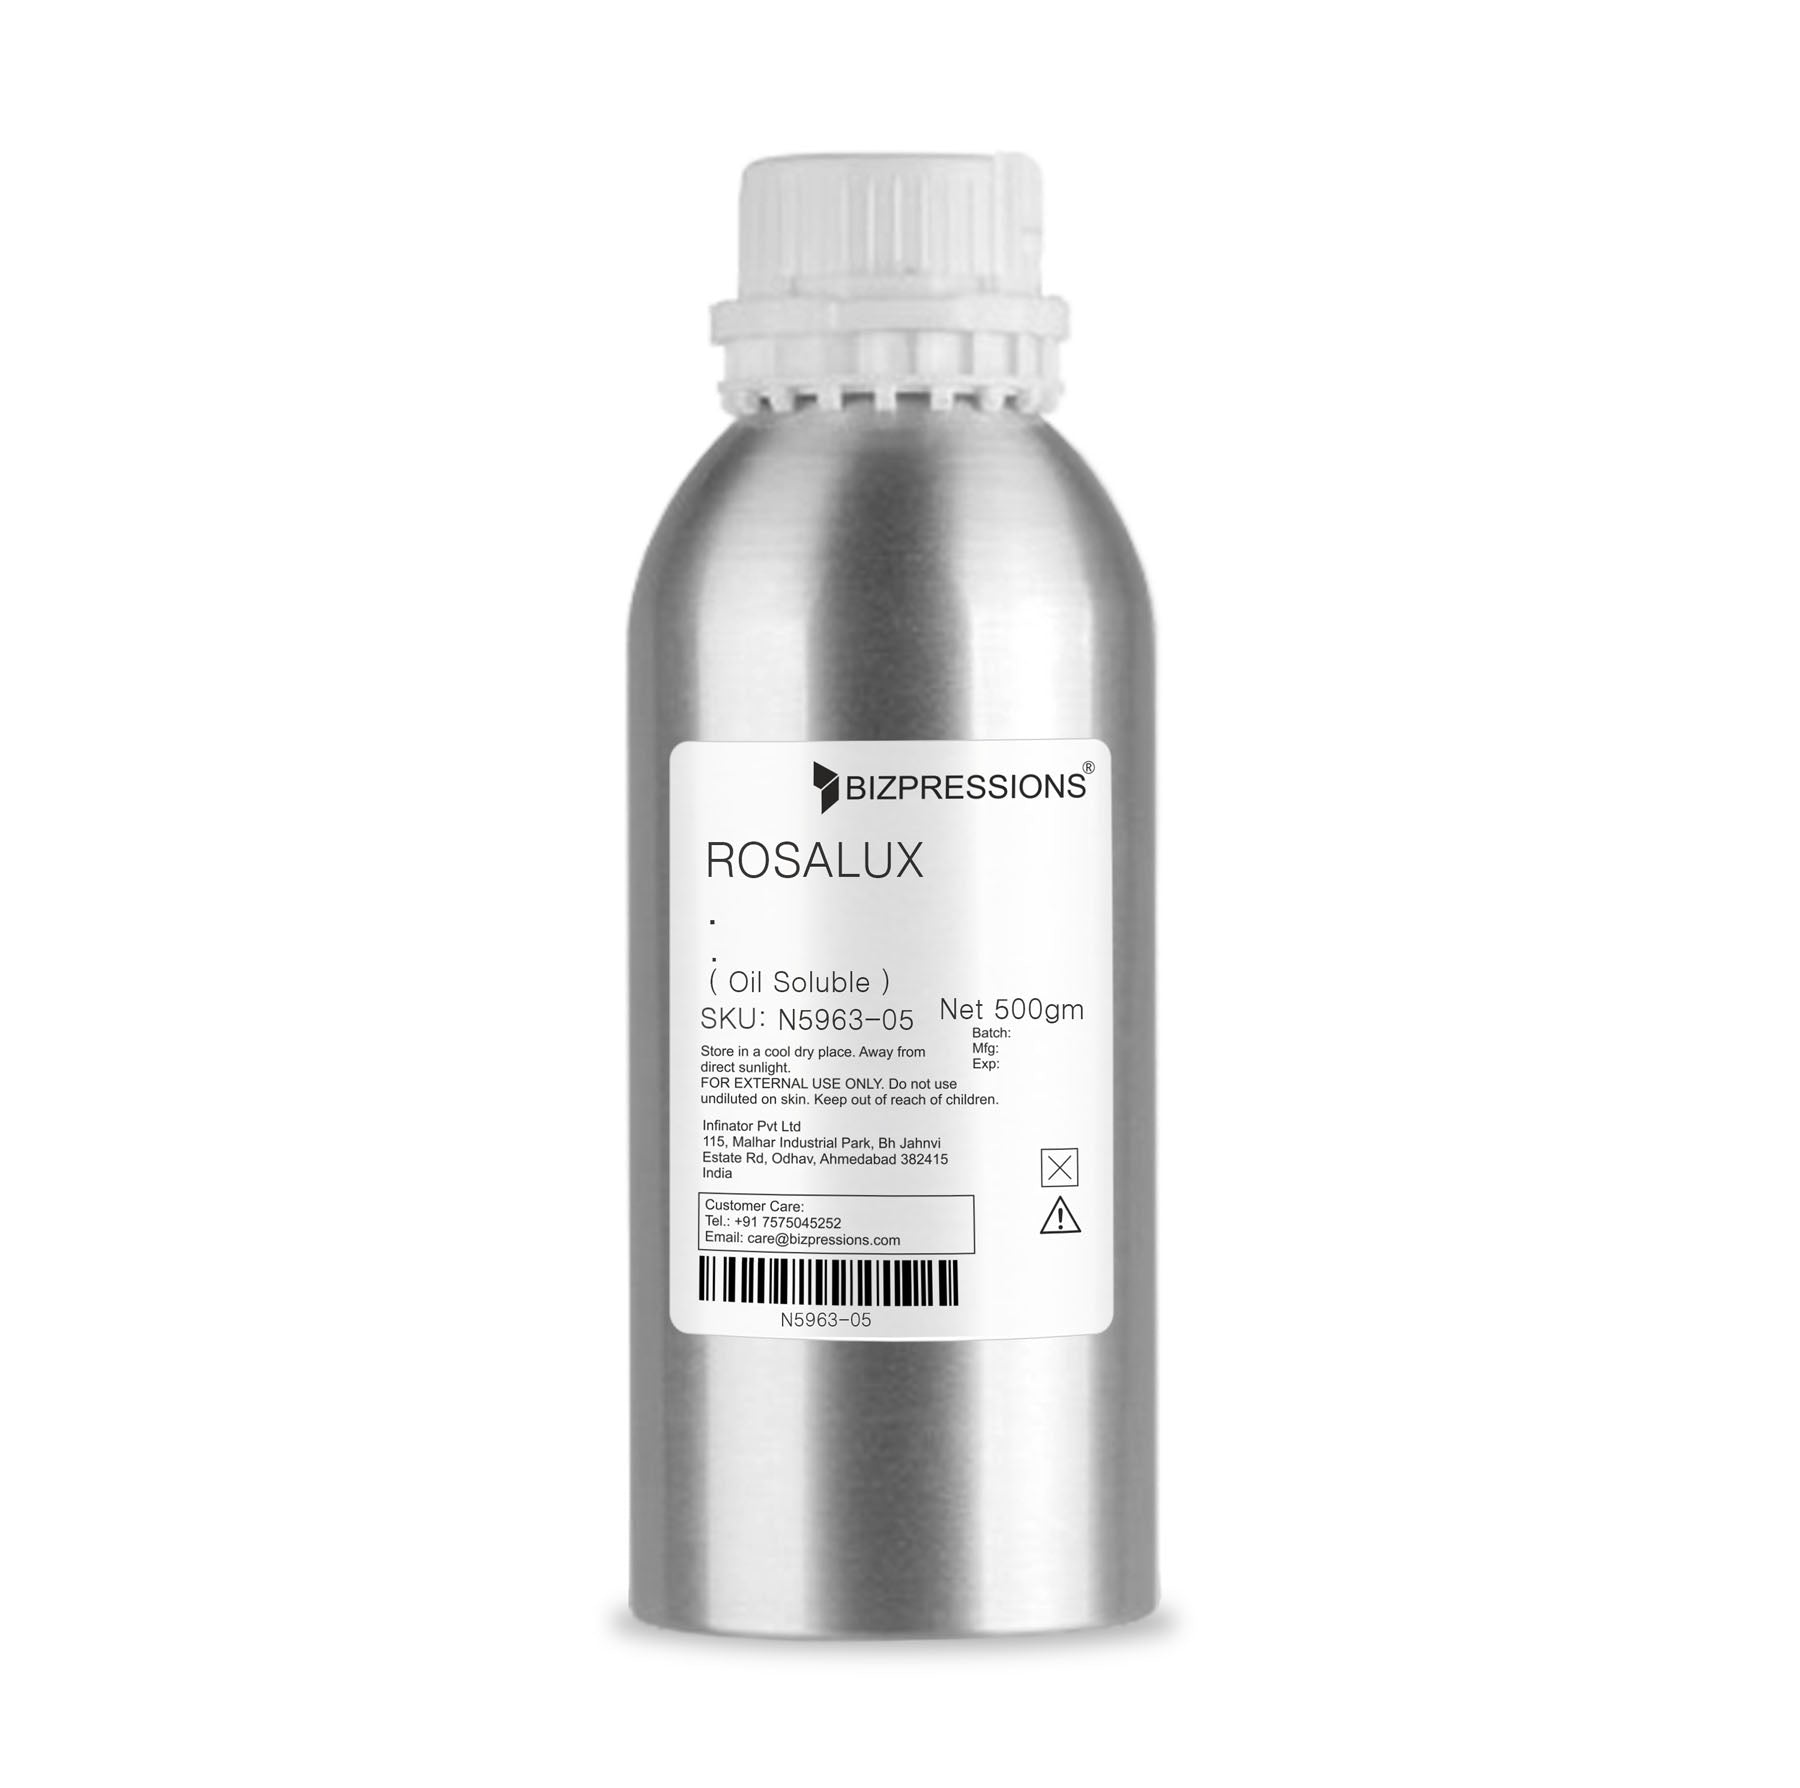 ROSALUX - Fragrance ( Oil Soluble ) - 500 gm